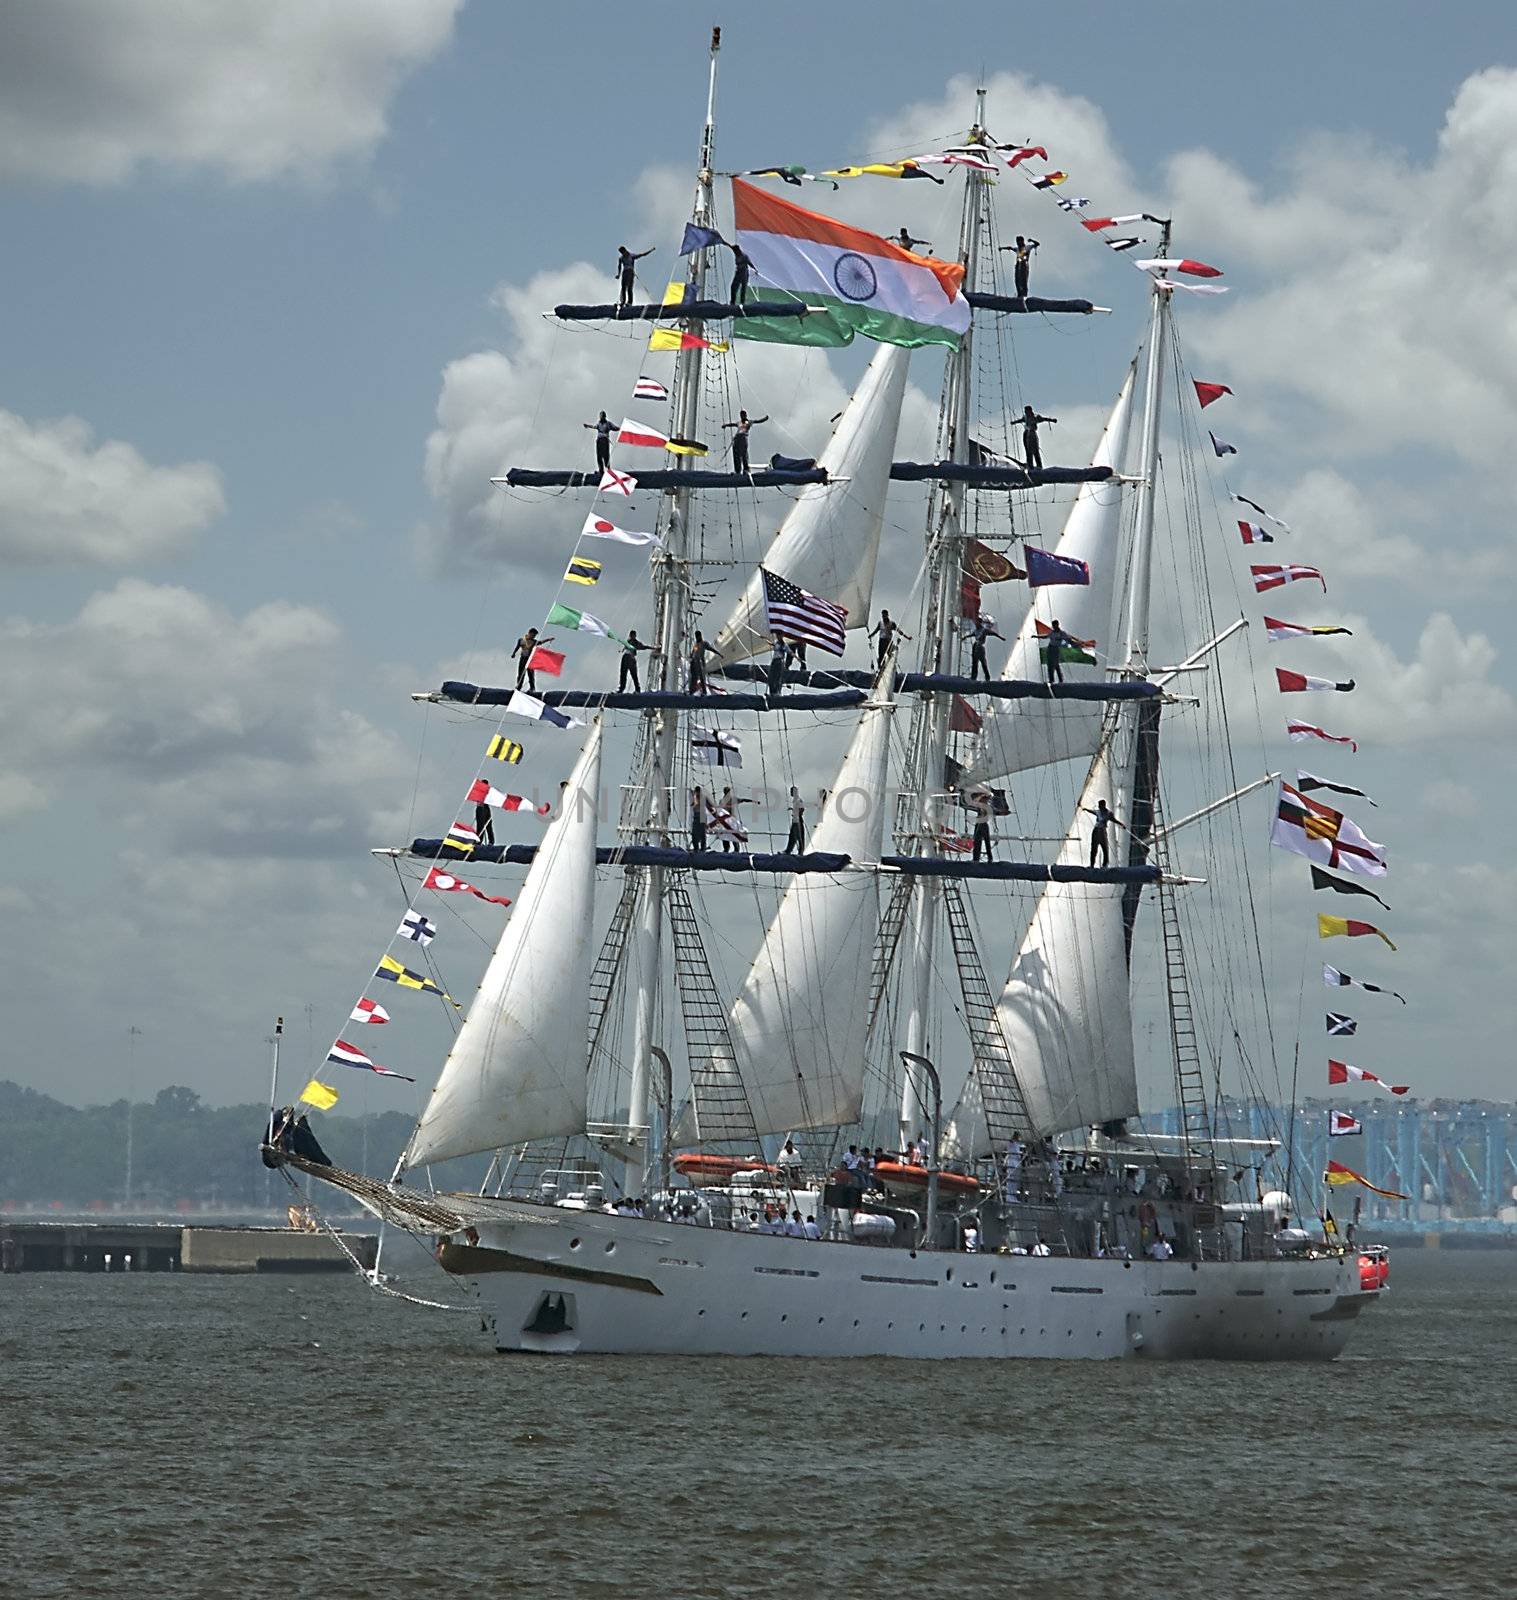 Sailors man the rails and masts of a sailing ship as it cruises into a coastal city's port